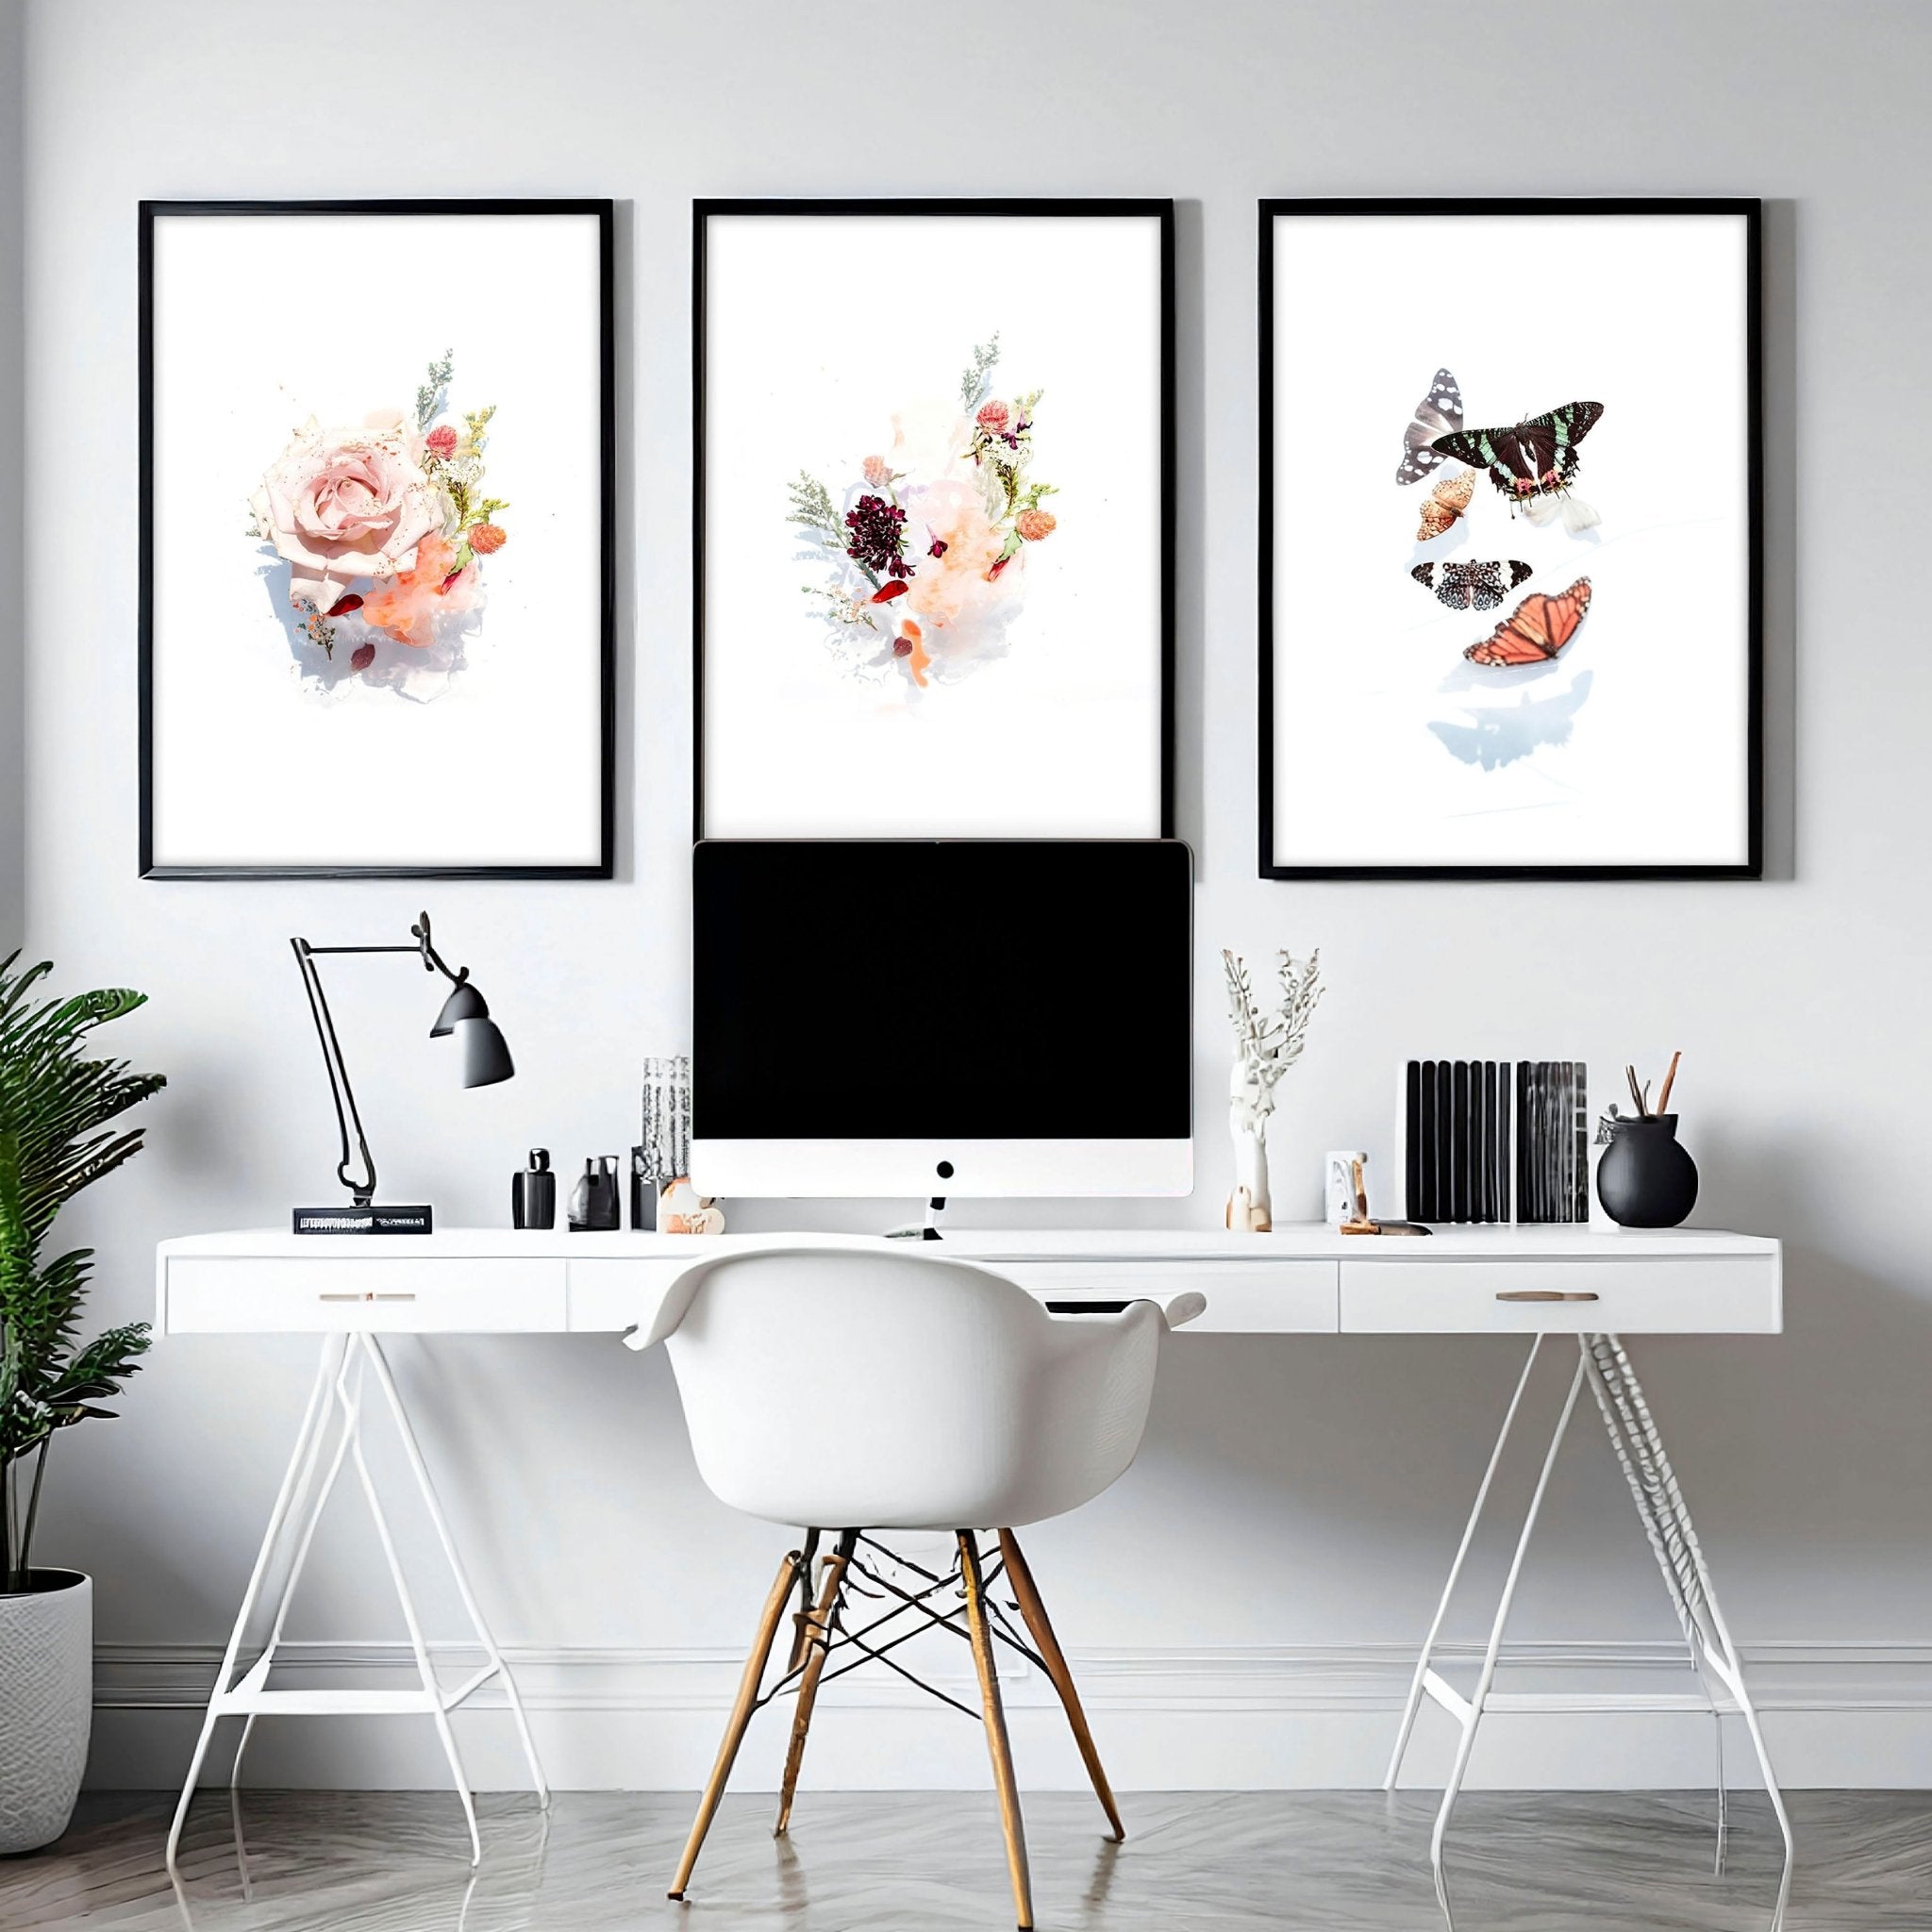 Office art ideas | set of 3 wall art prints